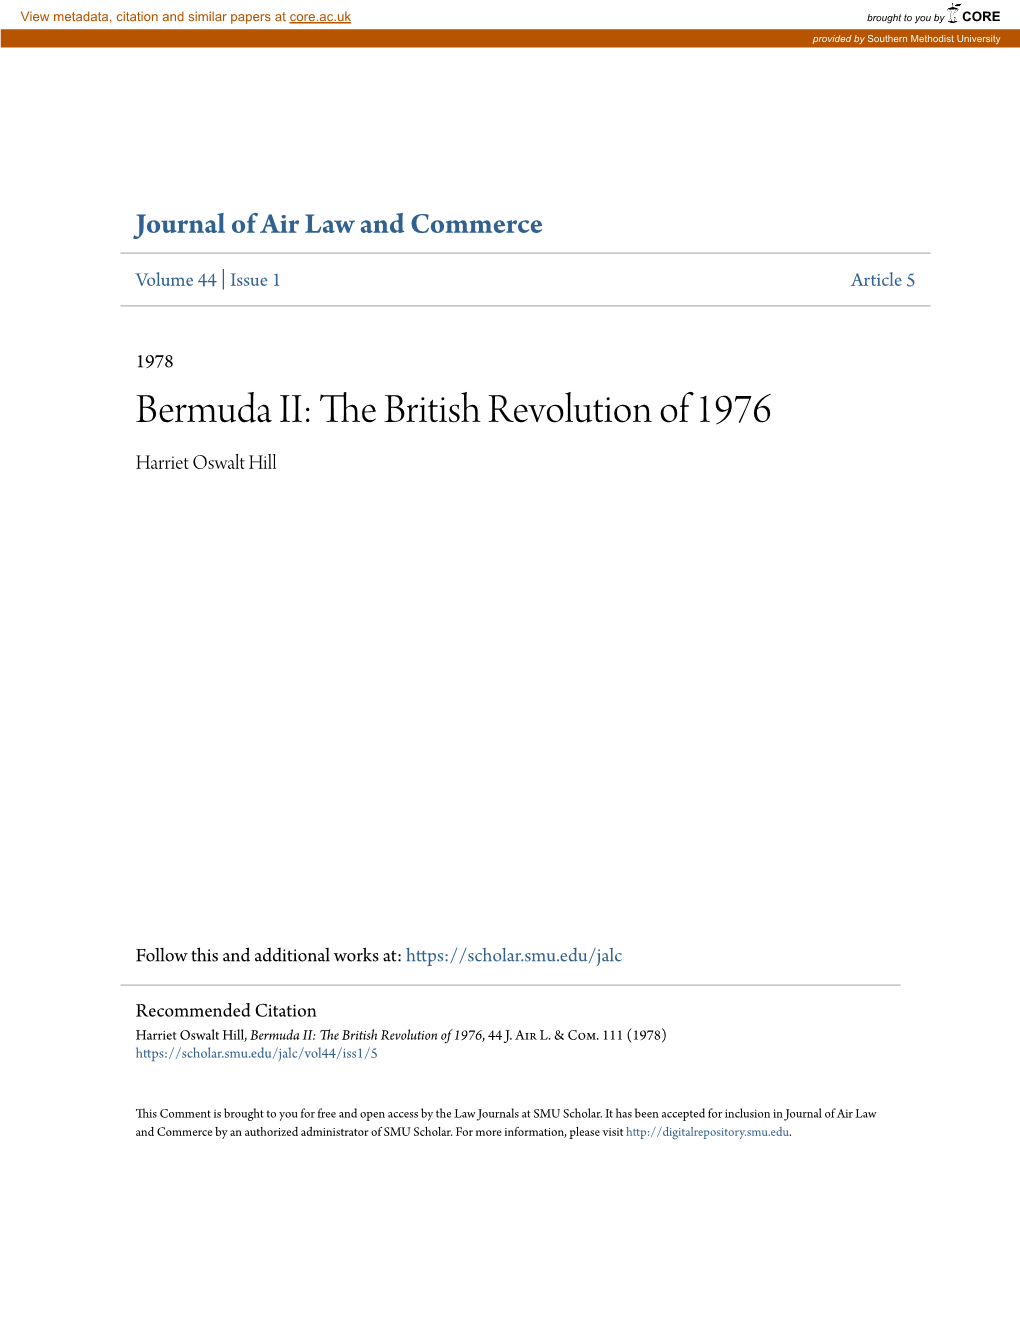 Bermuda II: the Rb Itish Revolution of 1976 Harriet Oswalt Hill